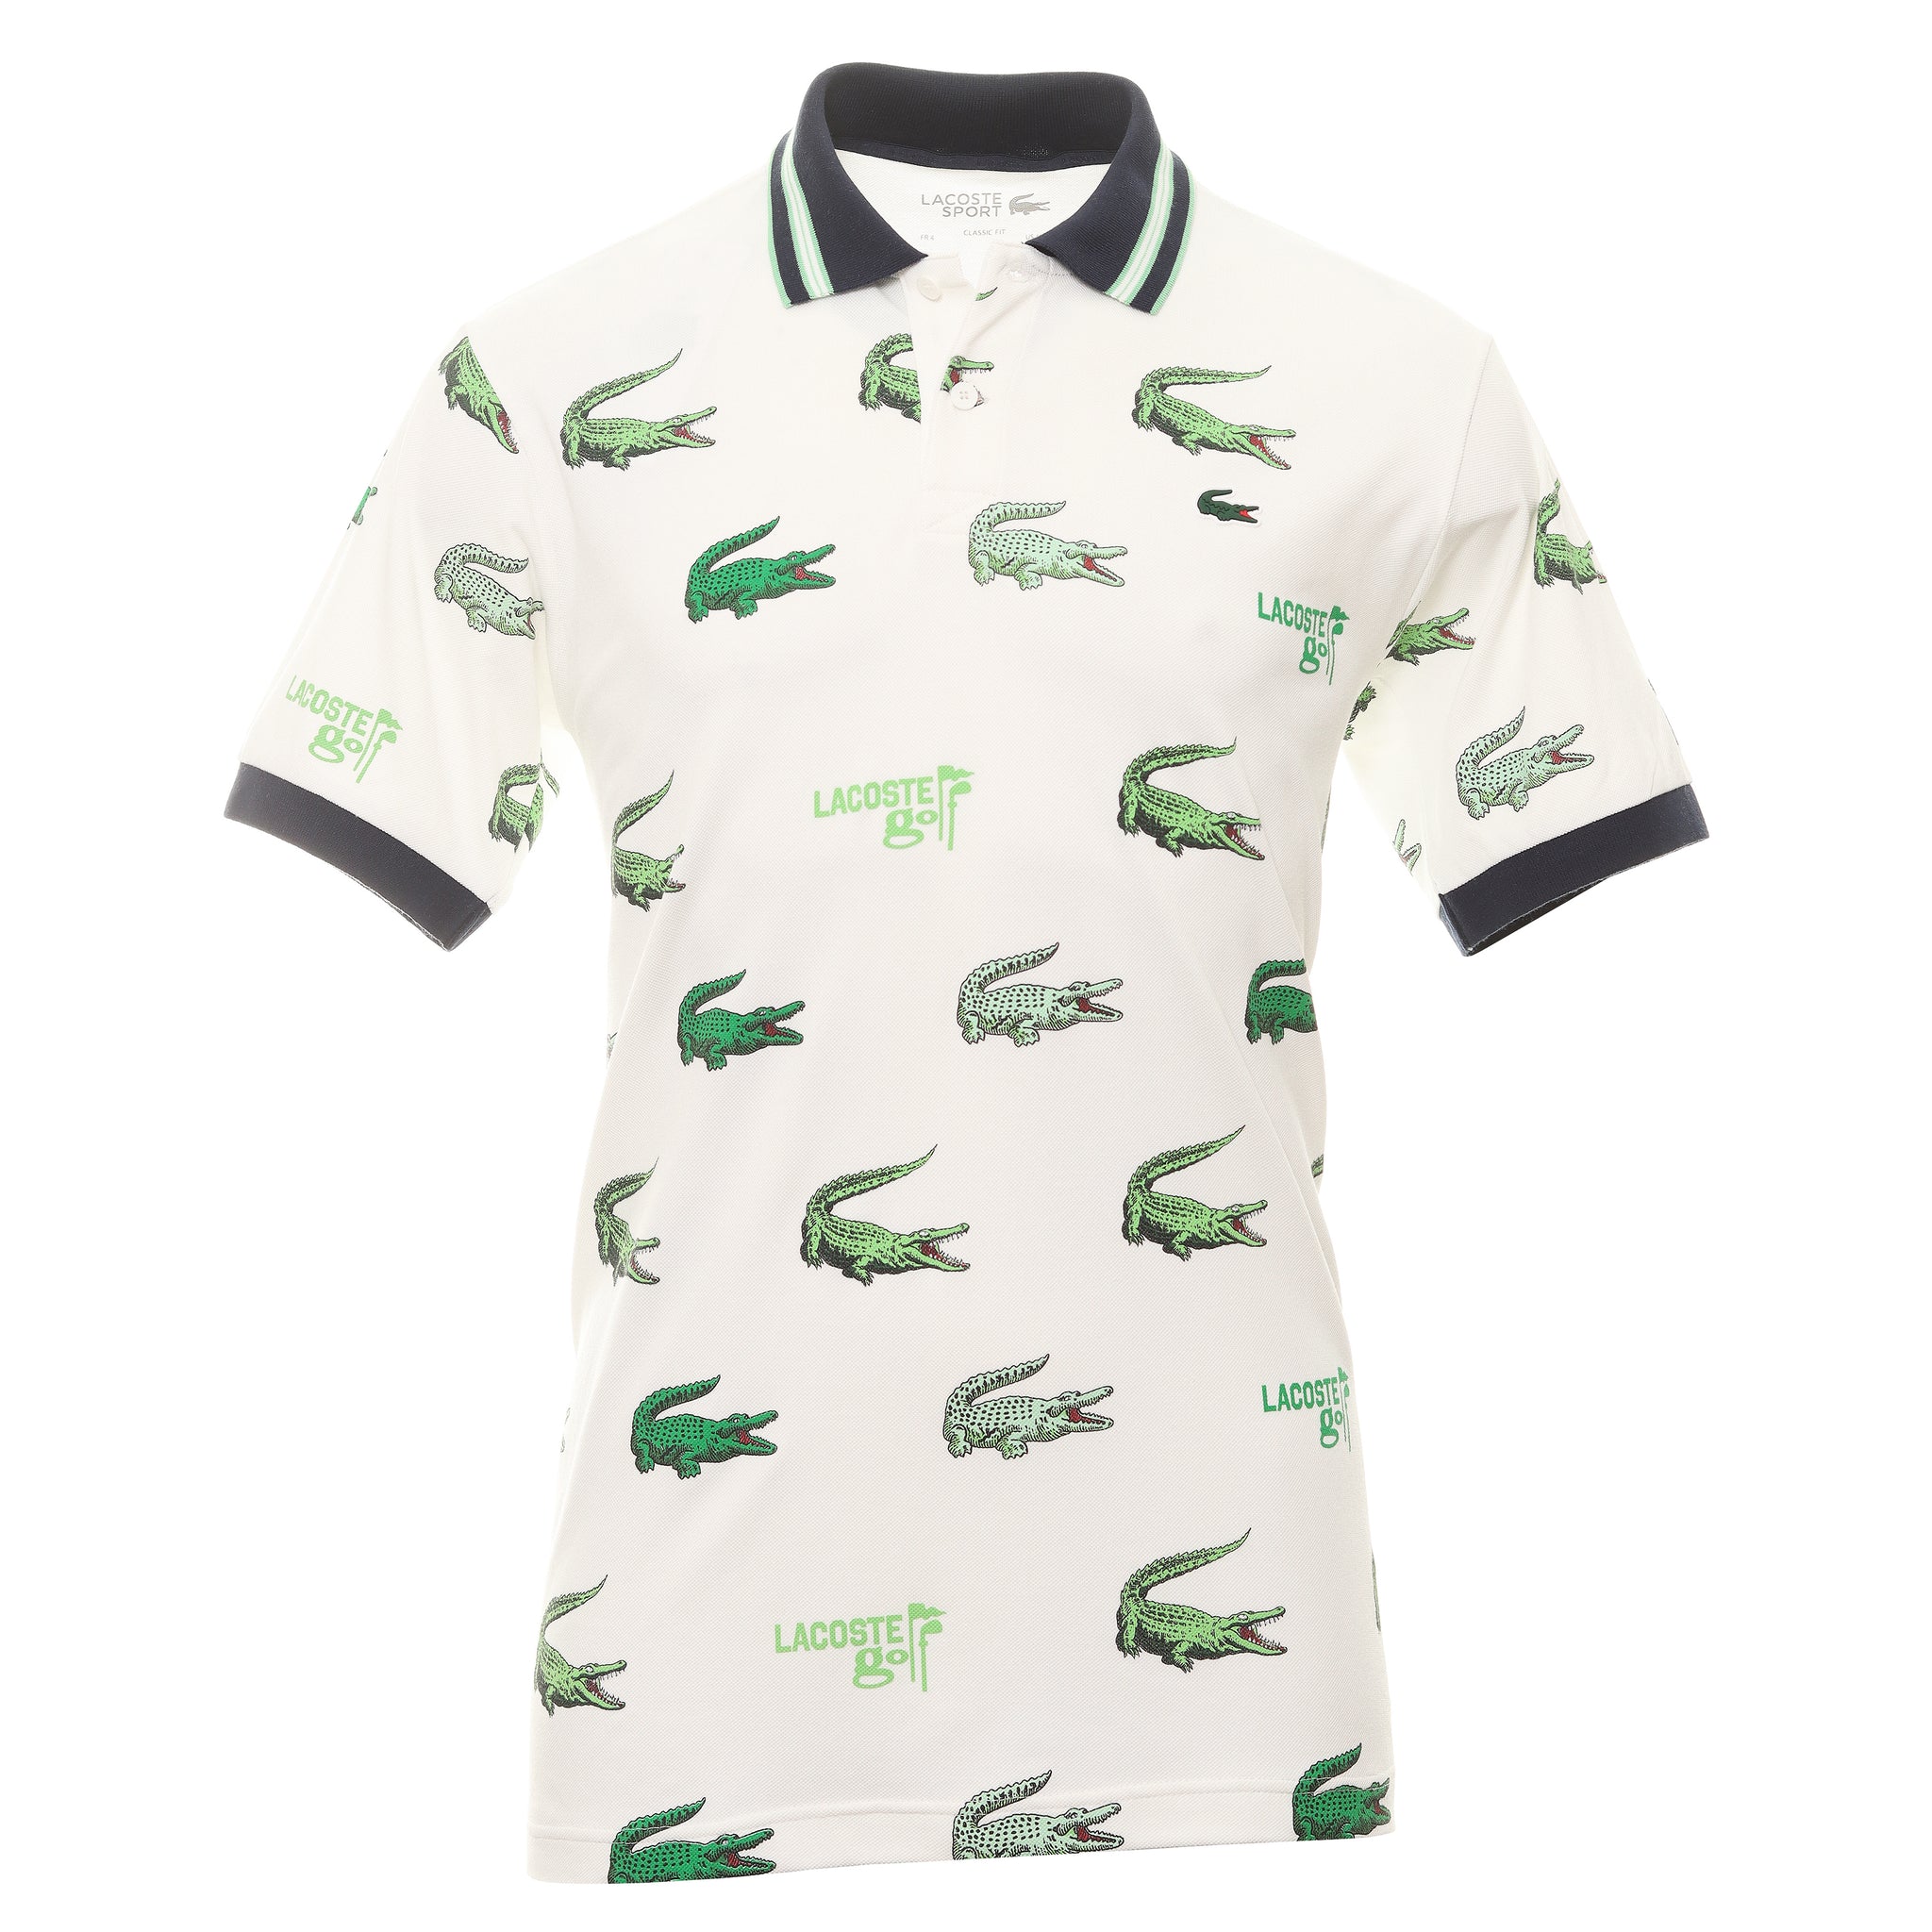 lacoste-golf-crocodile-print-polo-shirt-dh5181-white-navy-green-xib